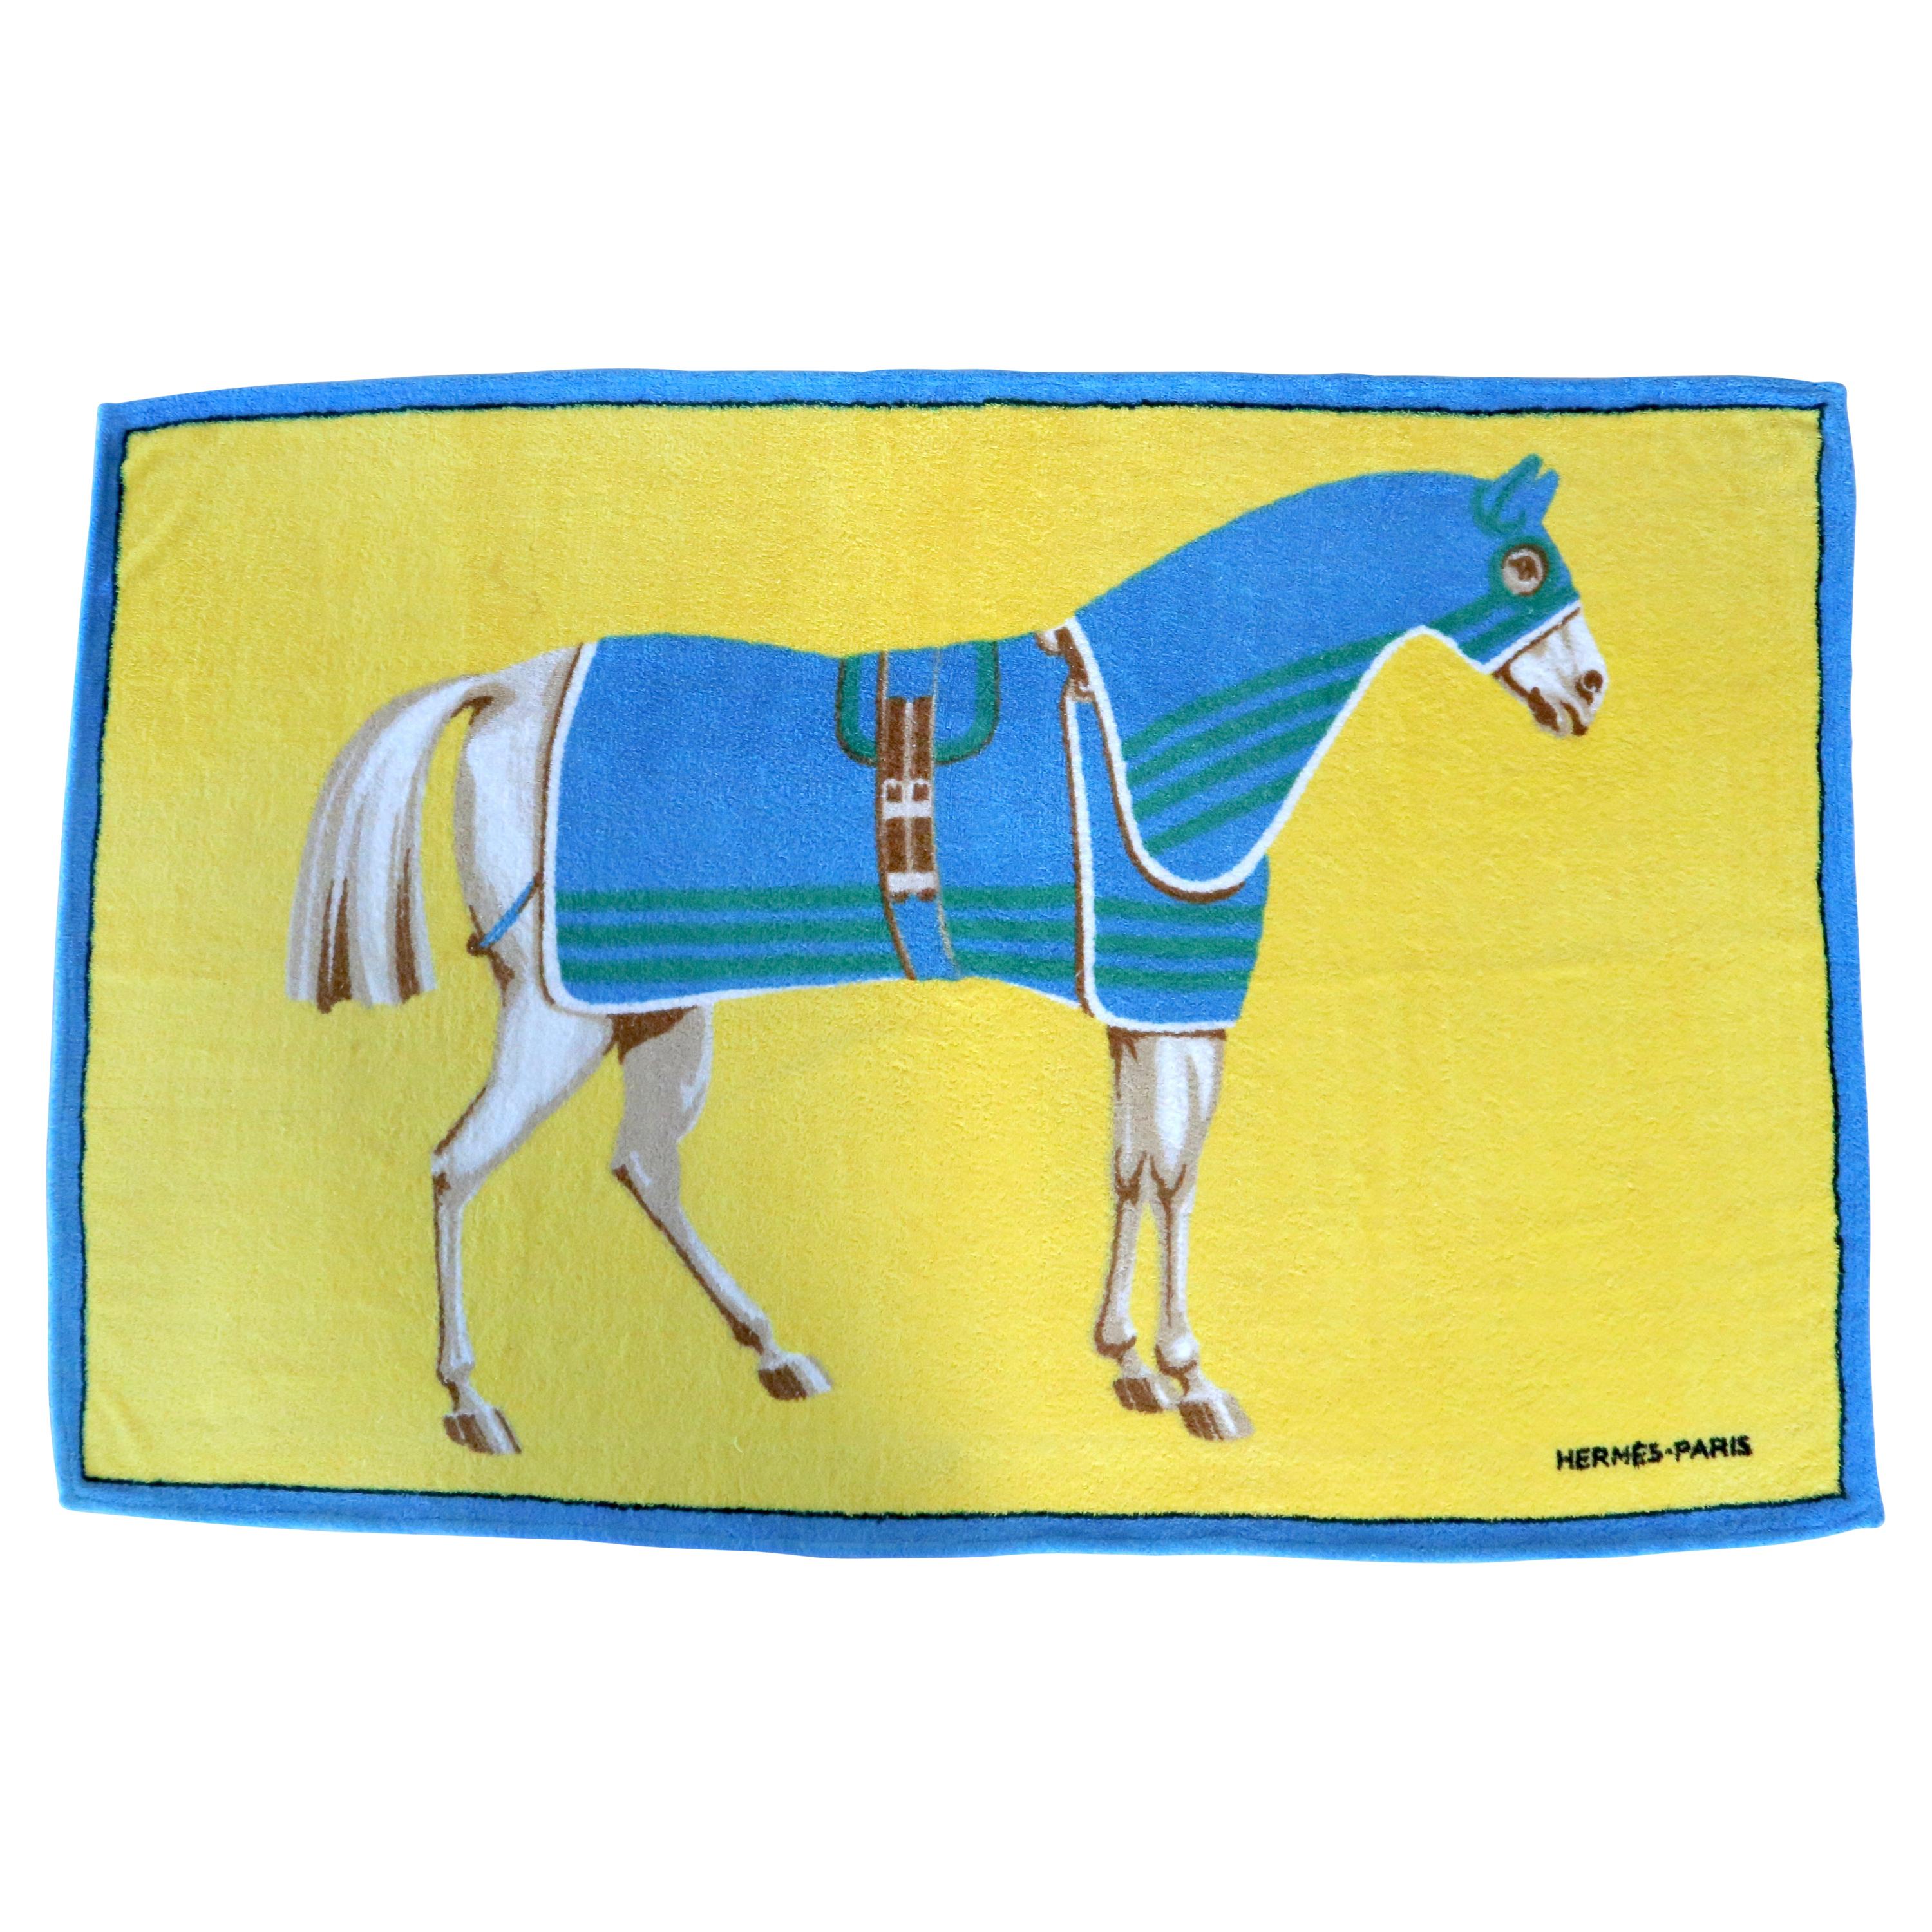 1990's HERMES equestrian printed cotton terry cloth beach towel